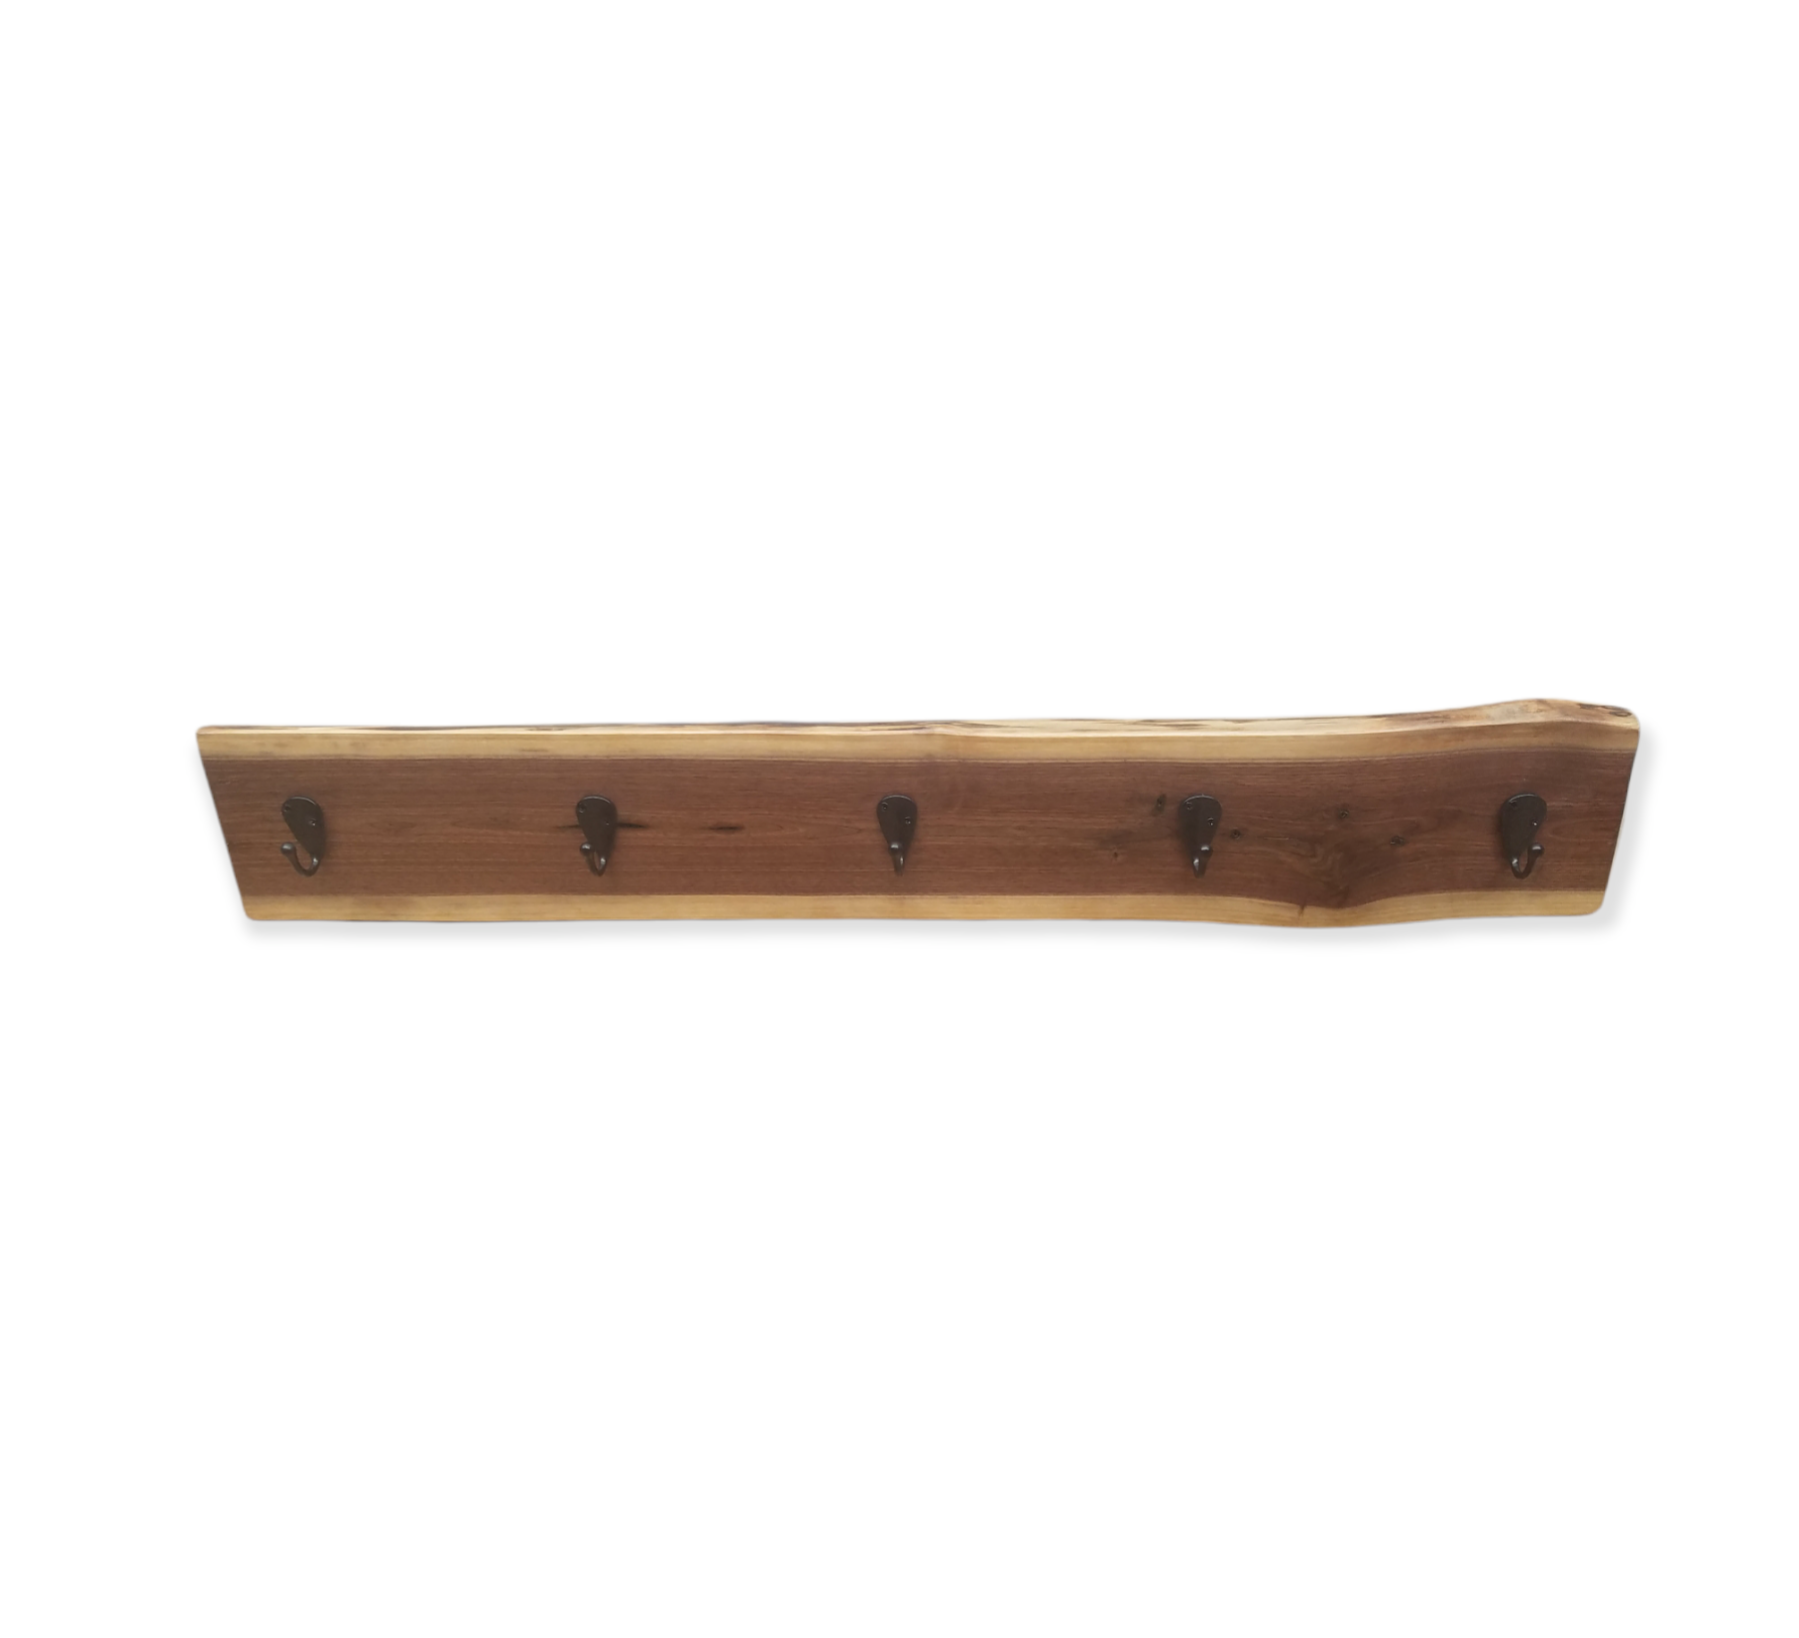 Wooden Coat Rack- Hat Rack- Organic- Walnut- Natural Edges- Black Hooks- Wood- Sustainable- Live Edges- Rustic- Modern- Simple- Functional